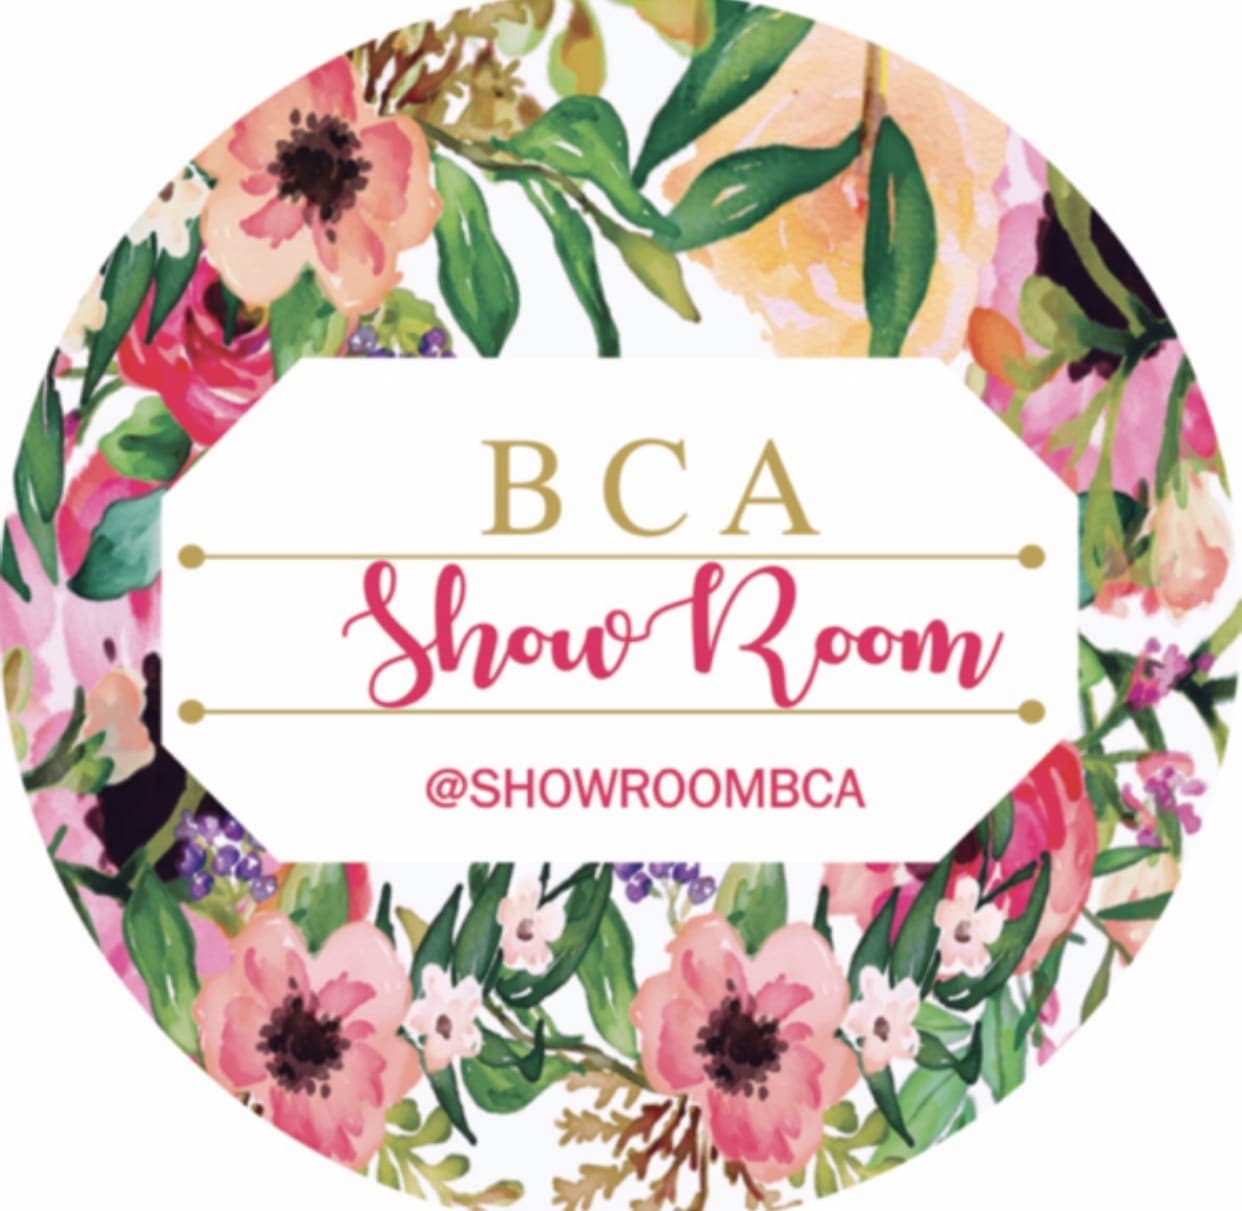 Bca Showroom